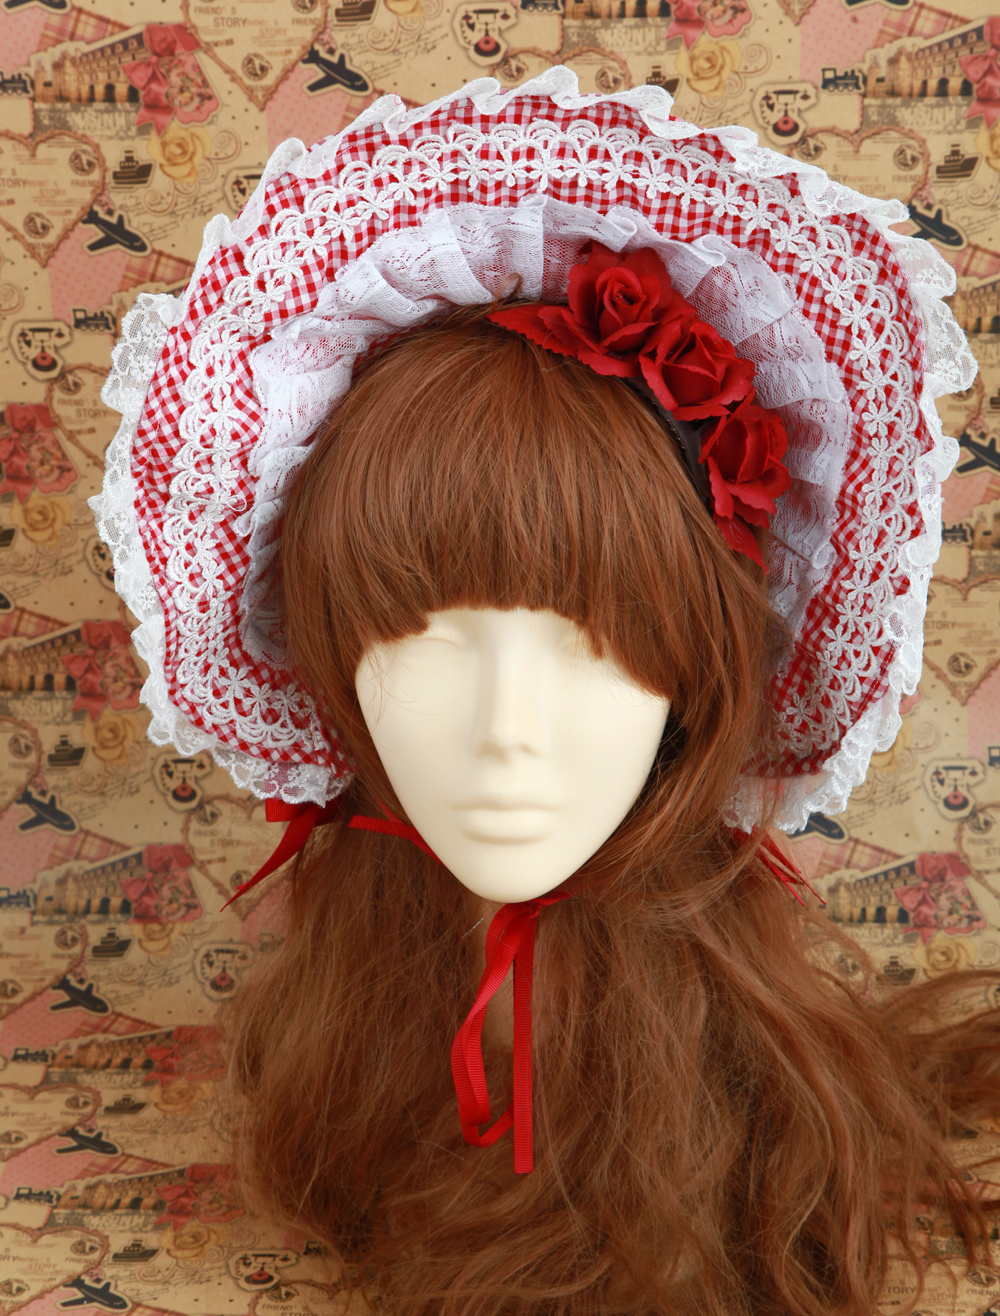 Sweet Red Roses Cotton Sweet Lolita Hat - Milanoo.com